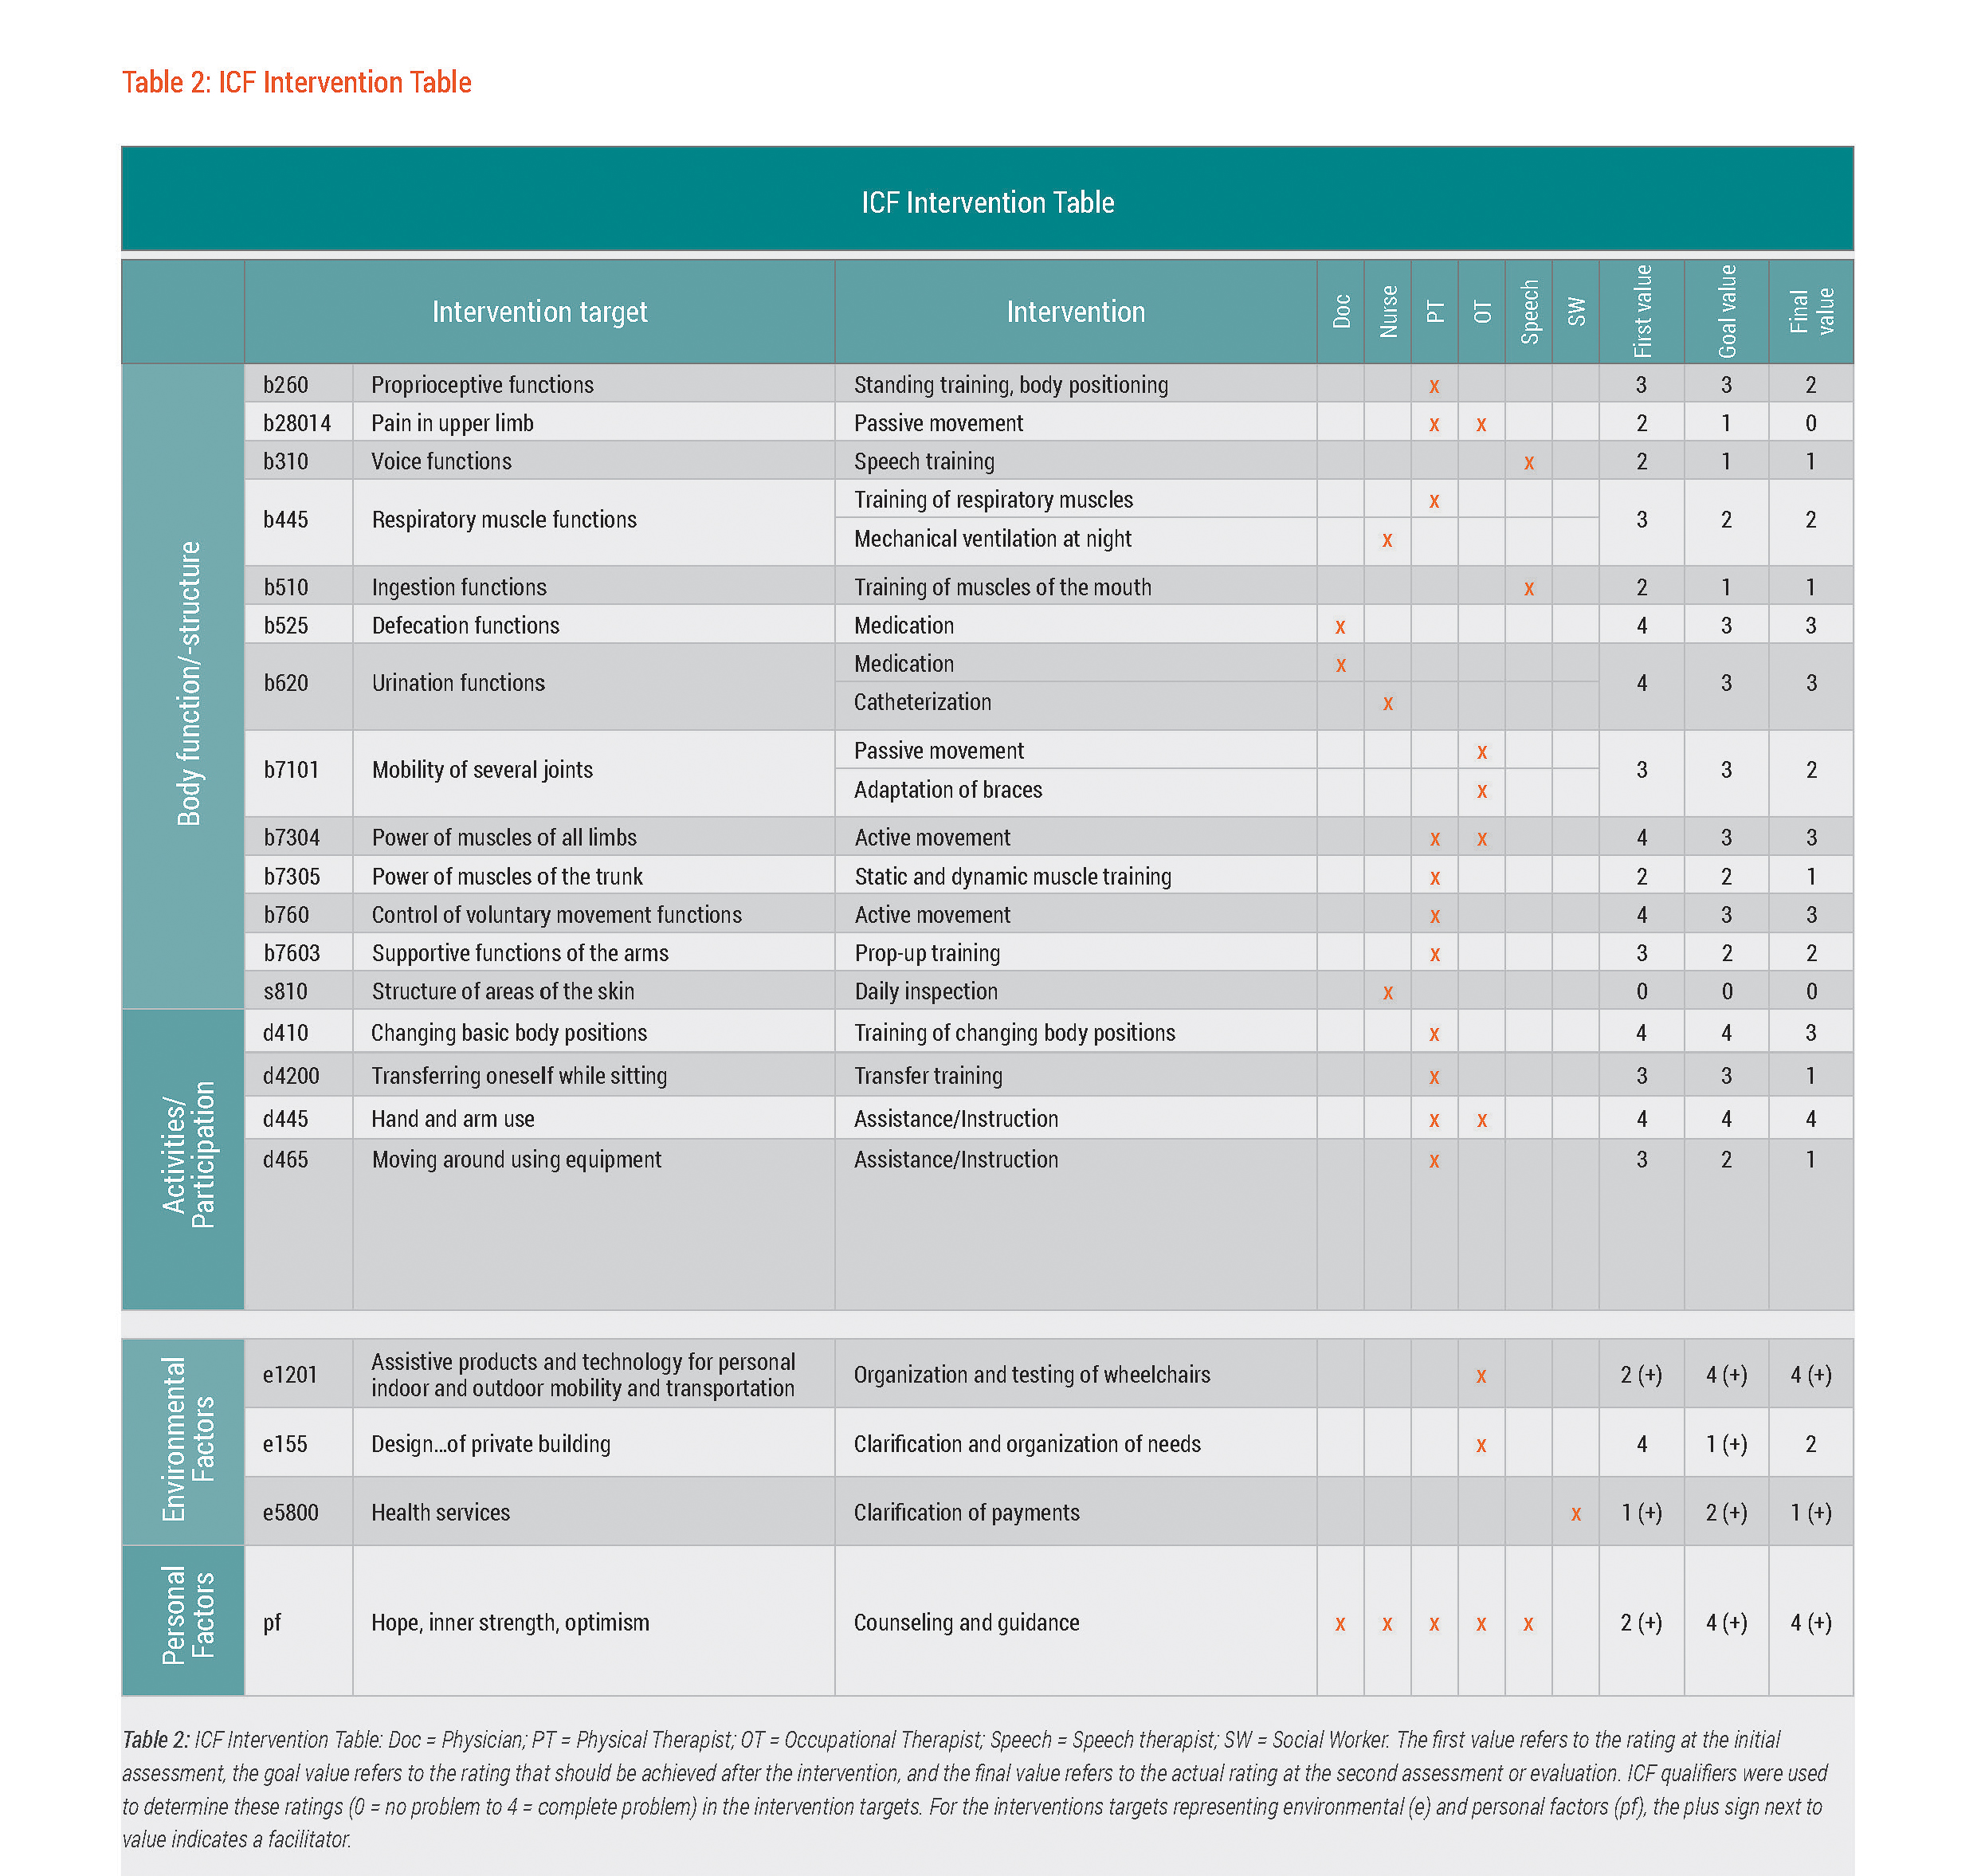 Figure 2: ICF Intervention Table